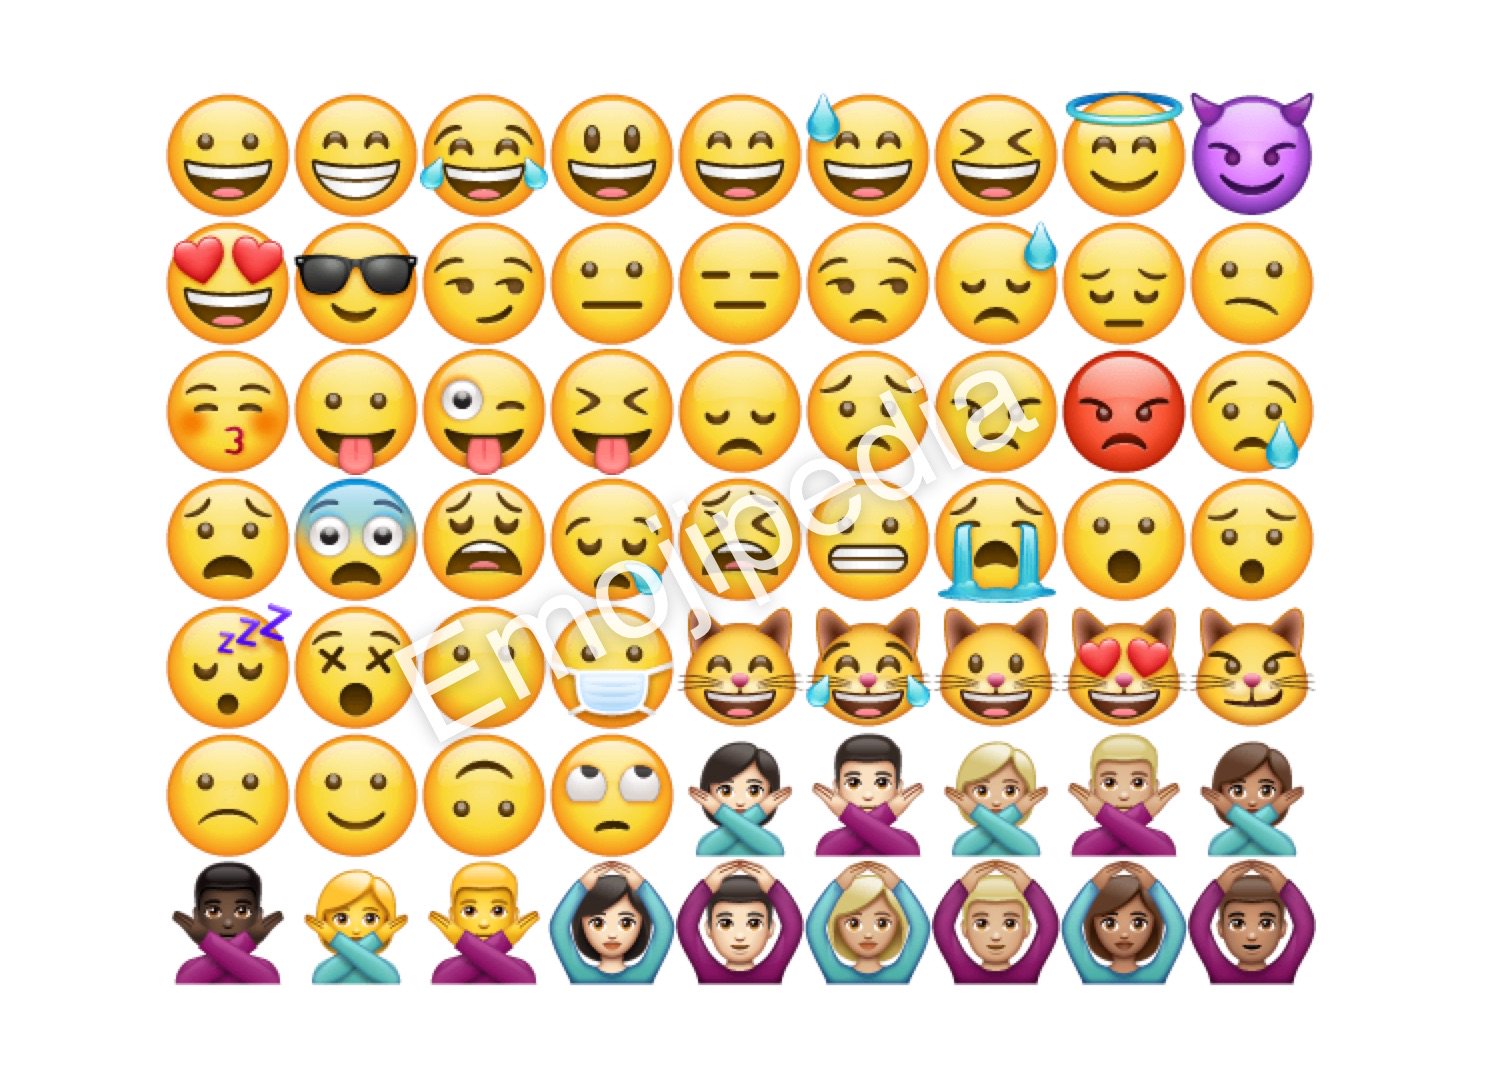  WhatsApp  now boasts its own set of emojis KLGadgetGuy